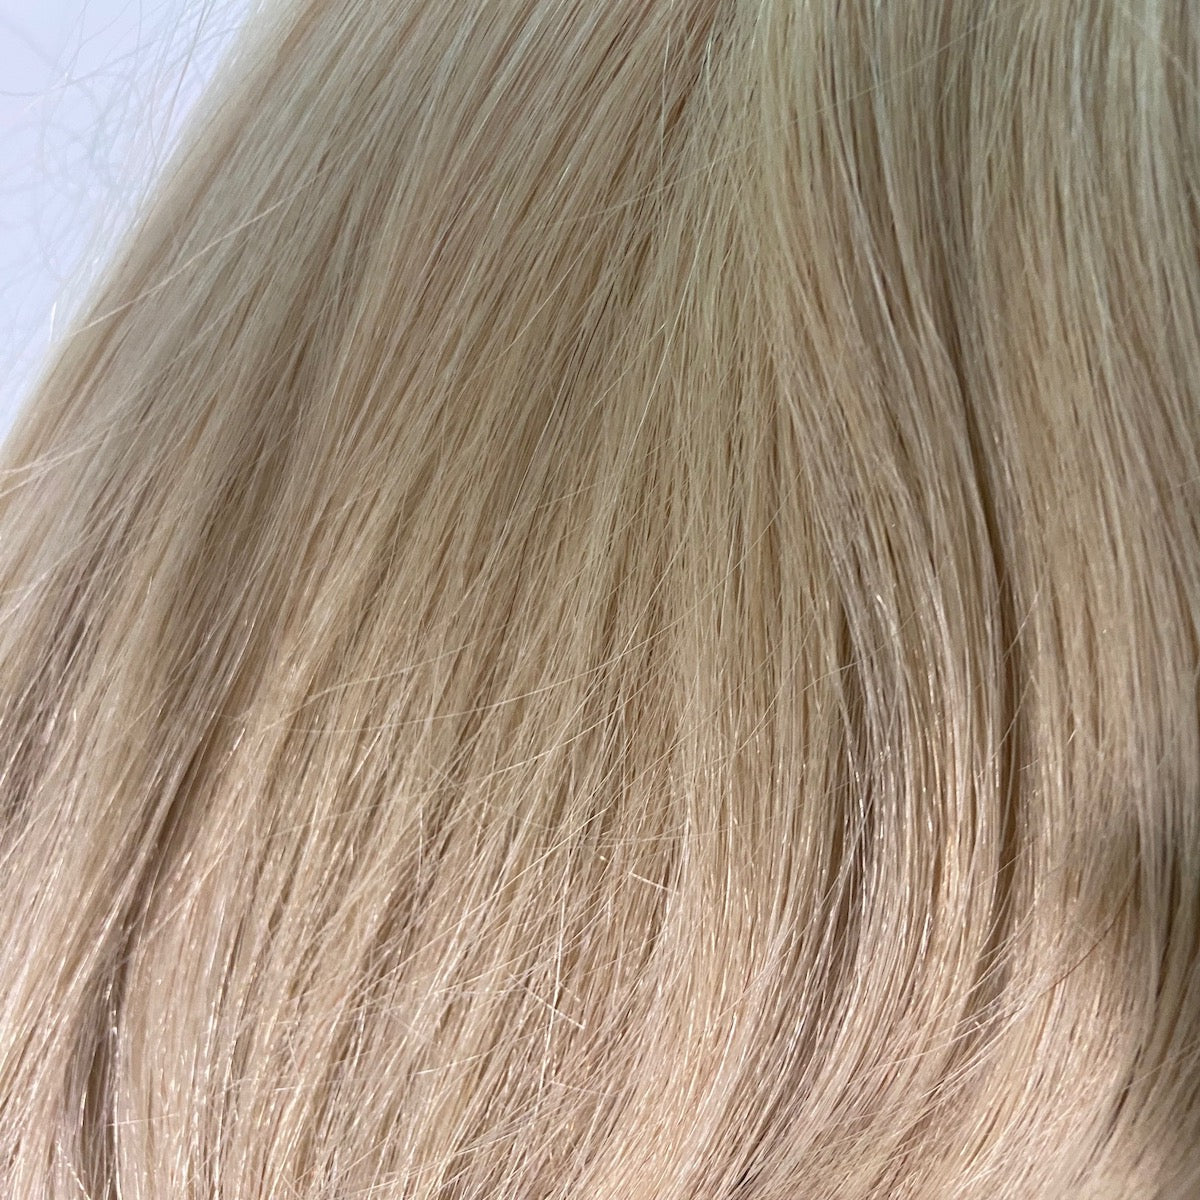 I-Tip 16" 25g Professional Hair Extensions - #16 Vanilla Blonde